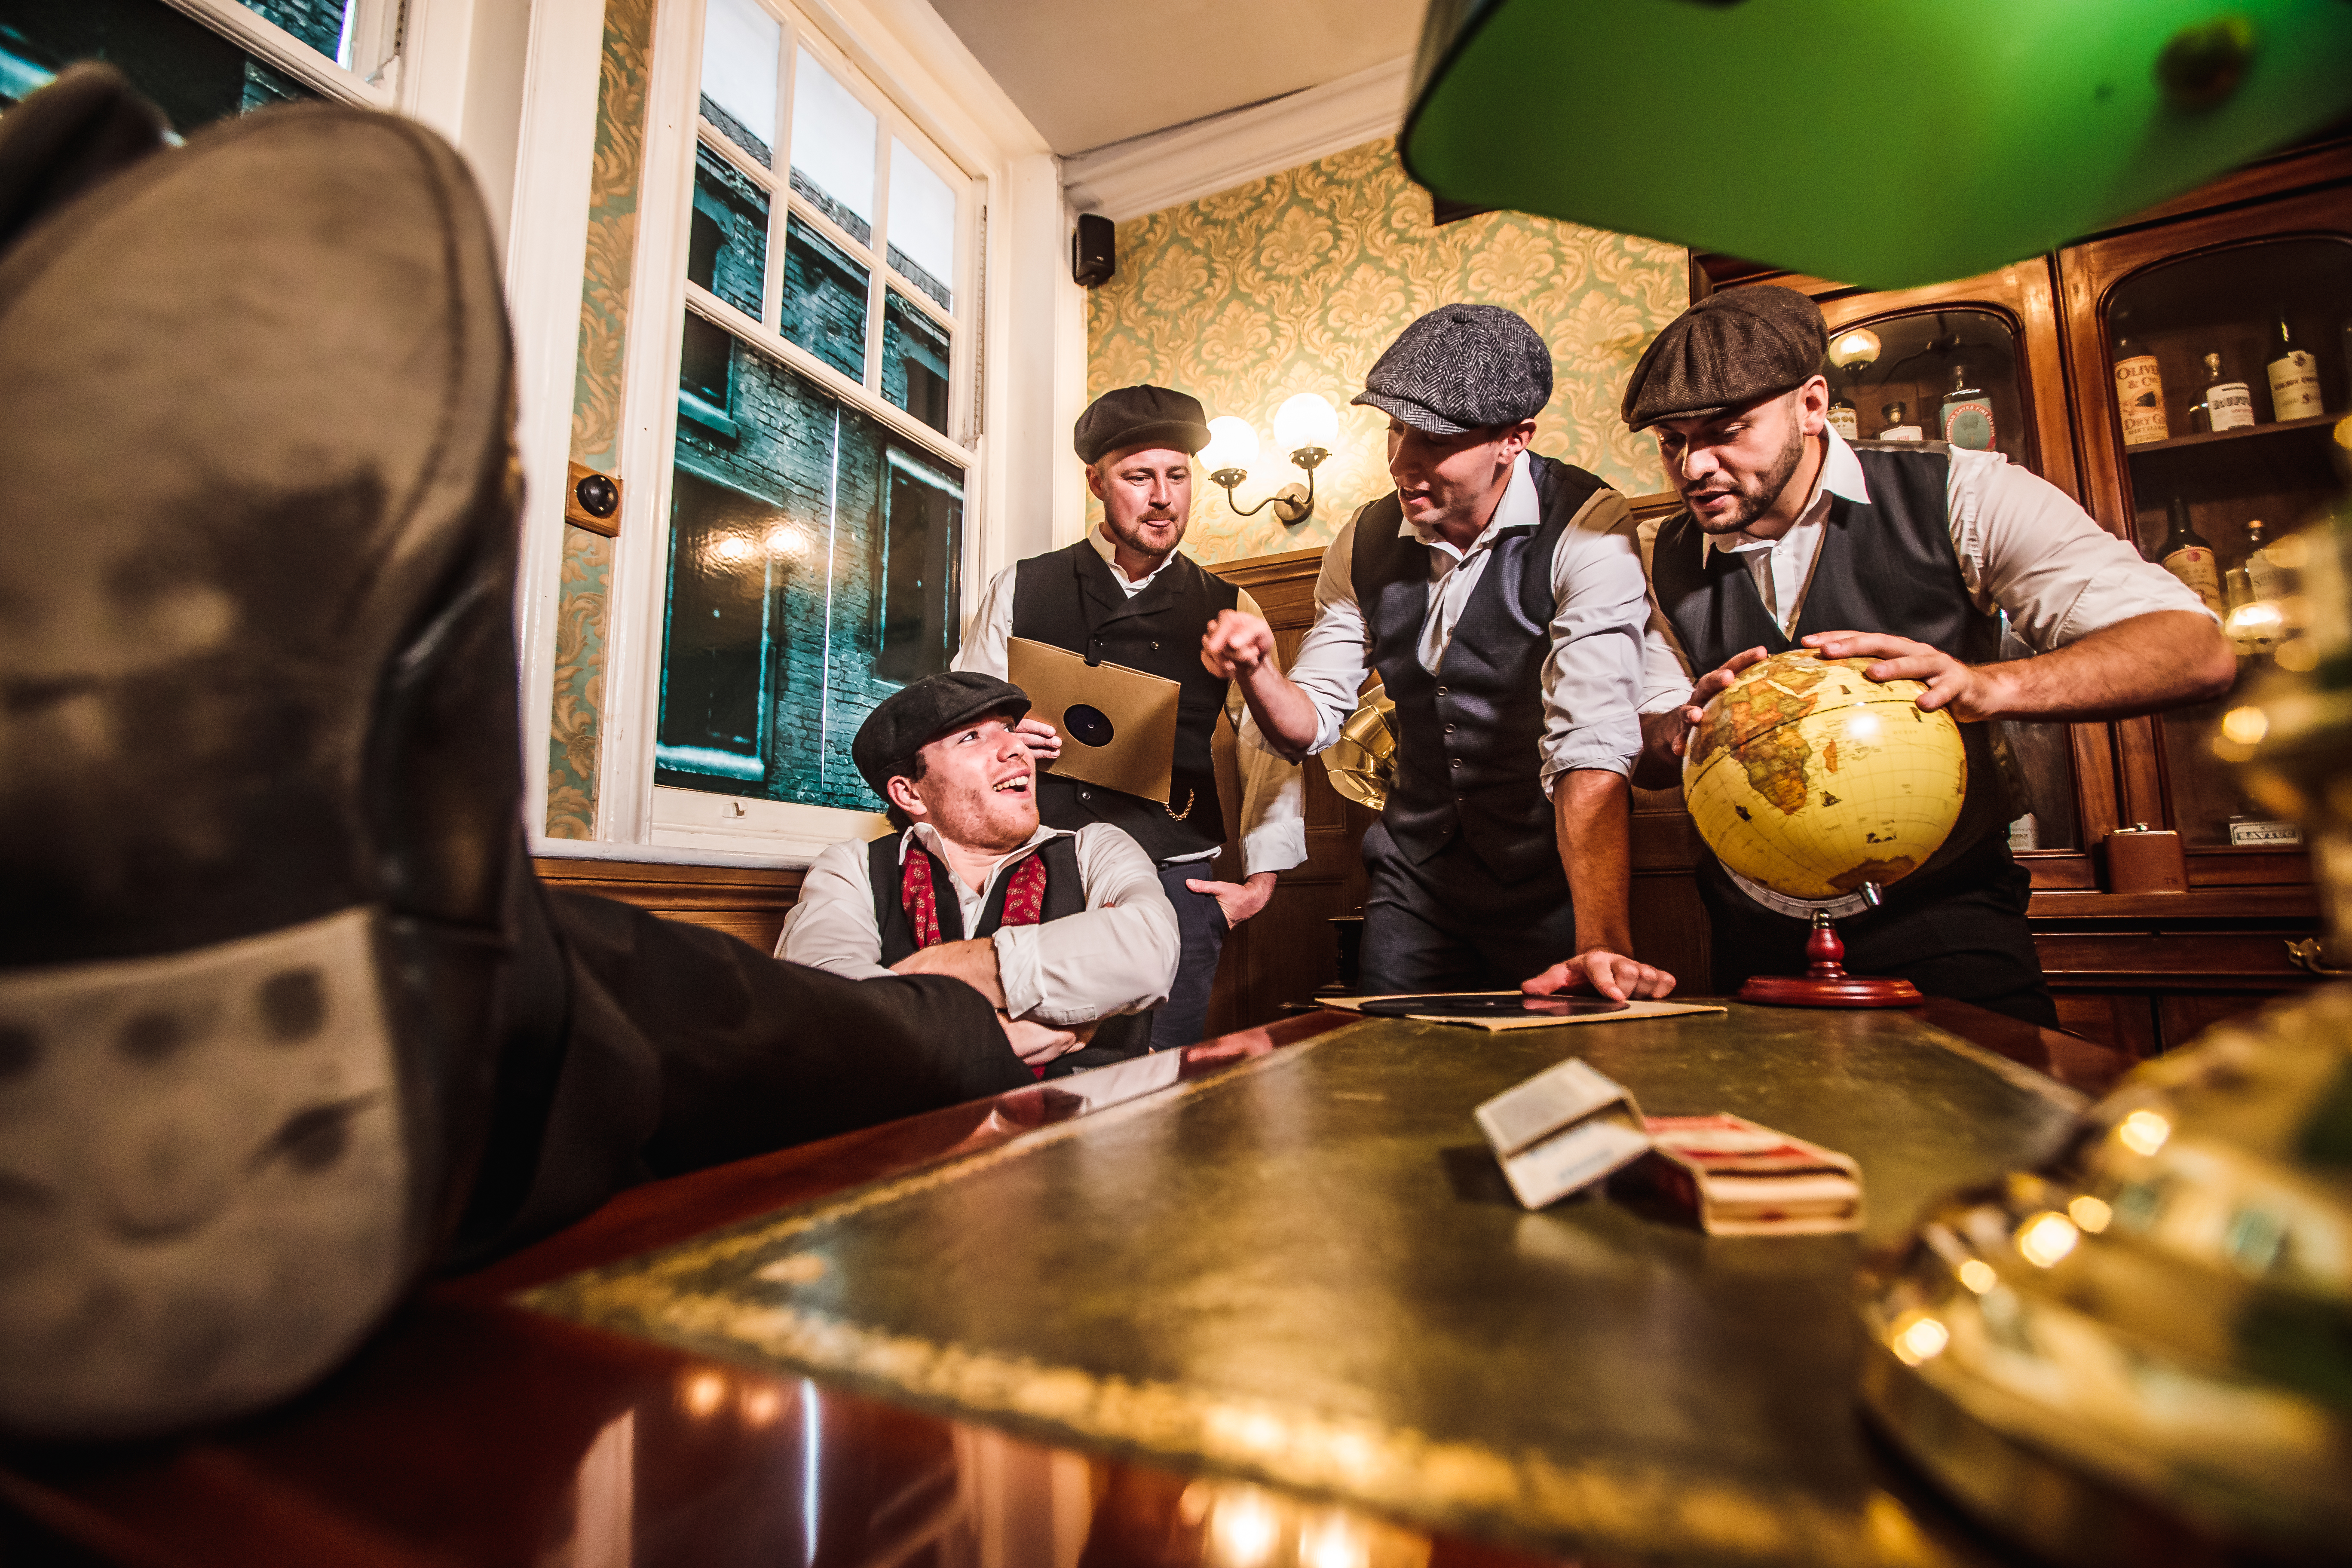 Group of men in flat caps in Peaky Blinders-themed escape room